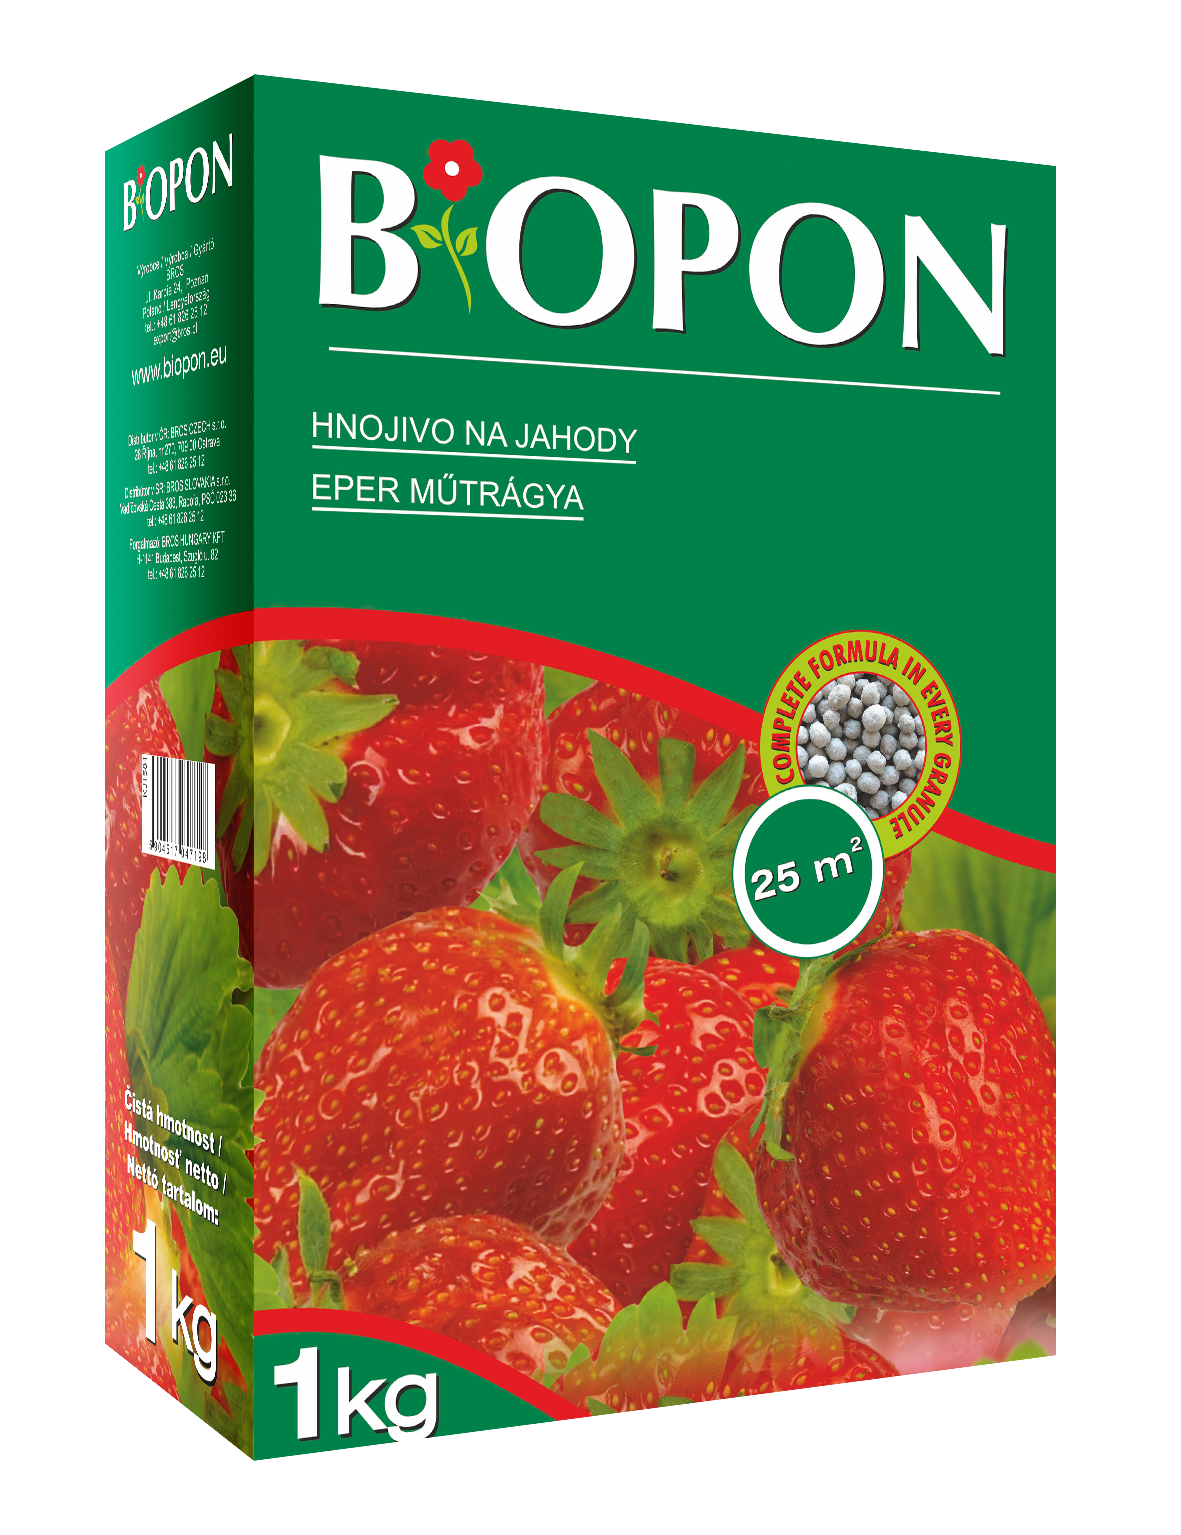 Biopon fertilizer for strawberries 1 kg